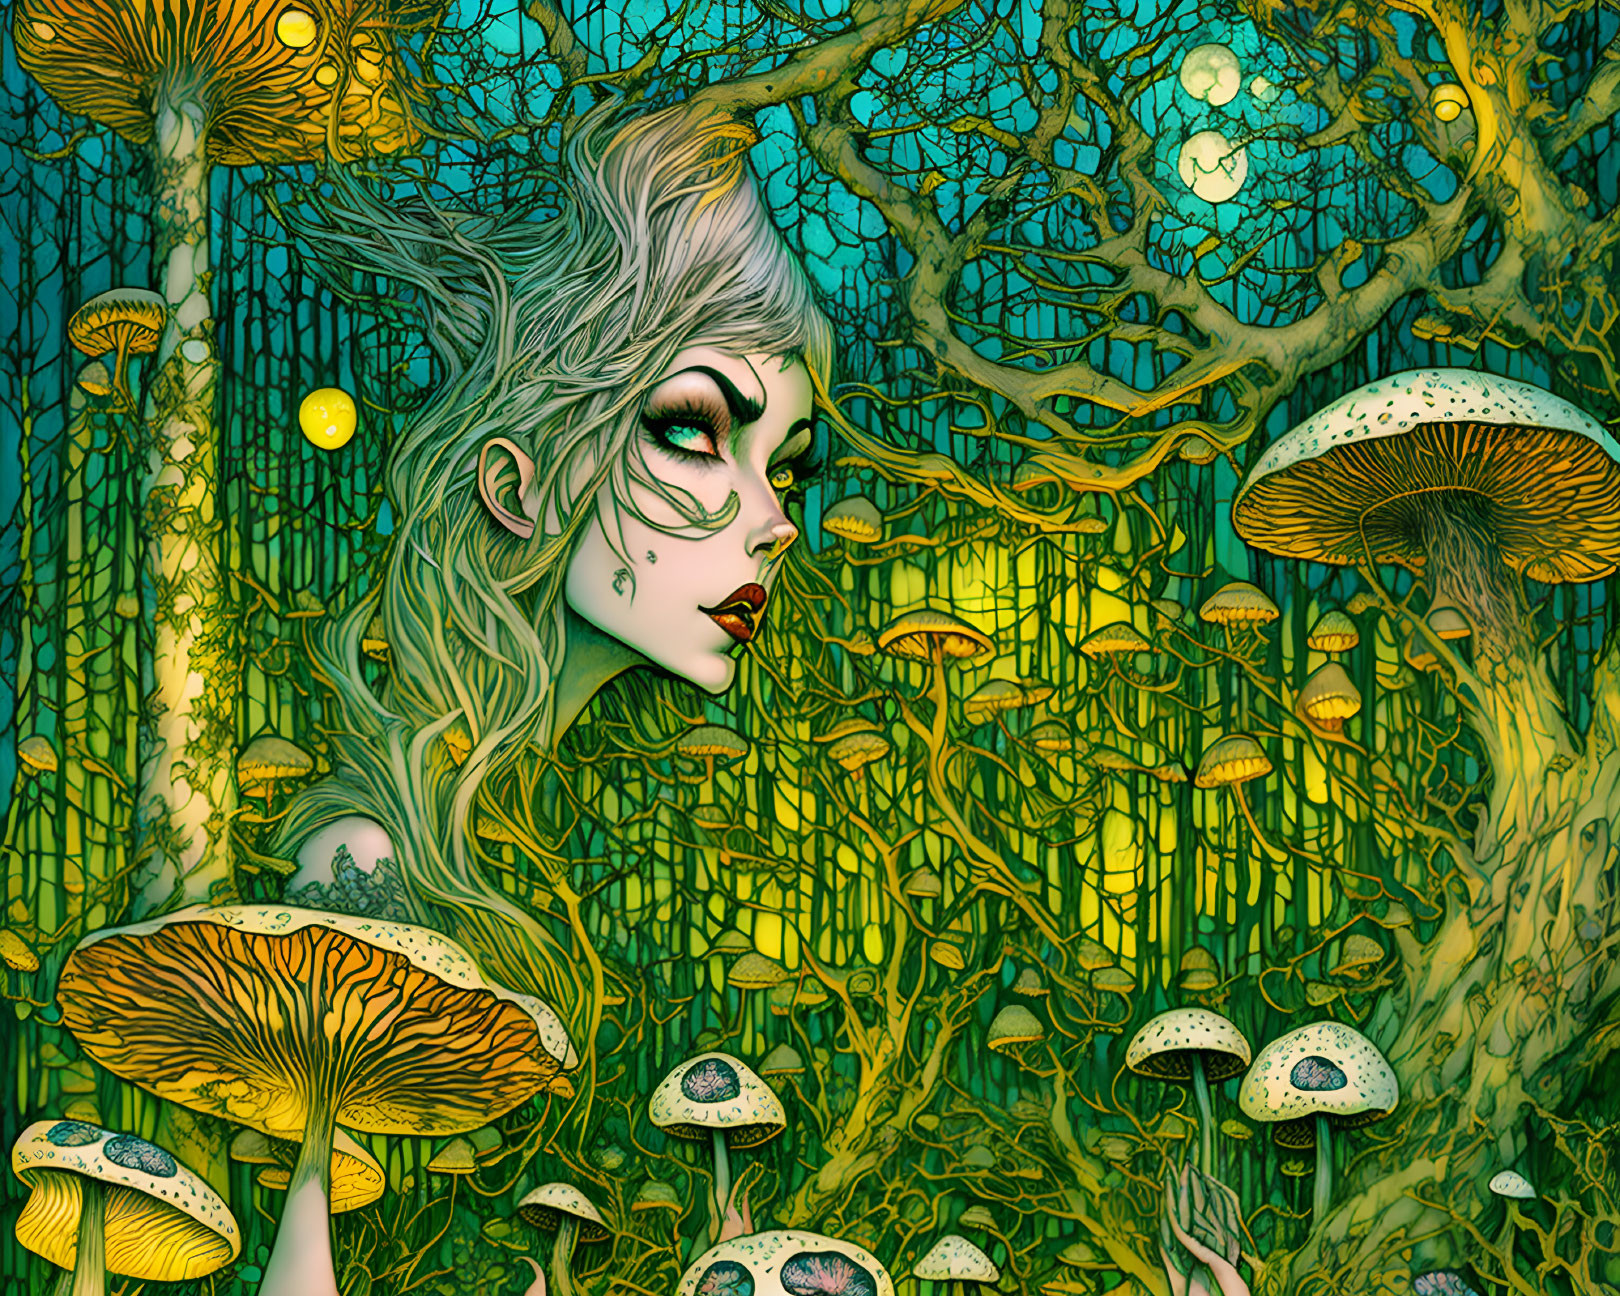 Fantastical illustration of woman in luminous mushroom forest